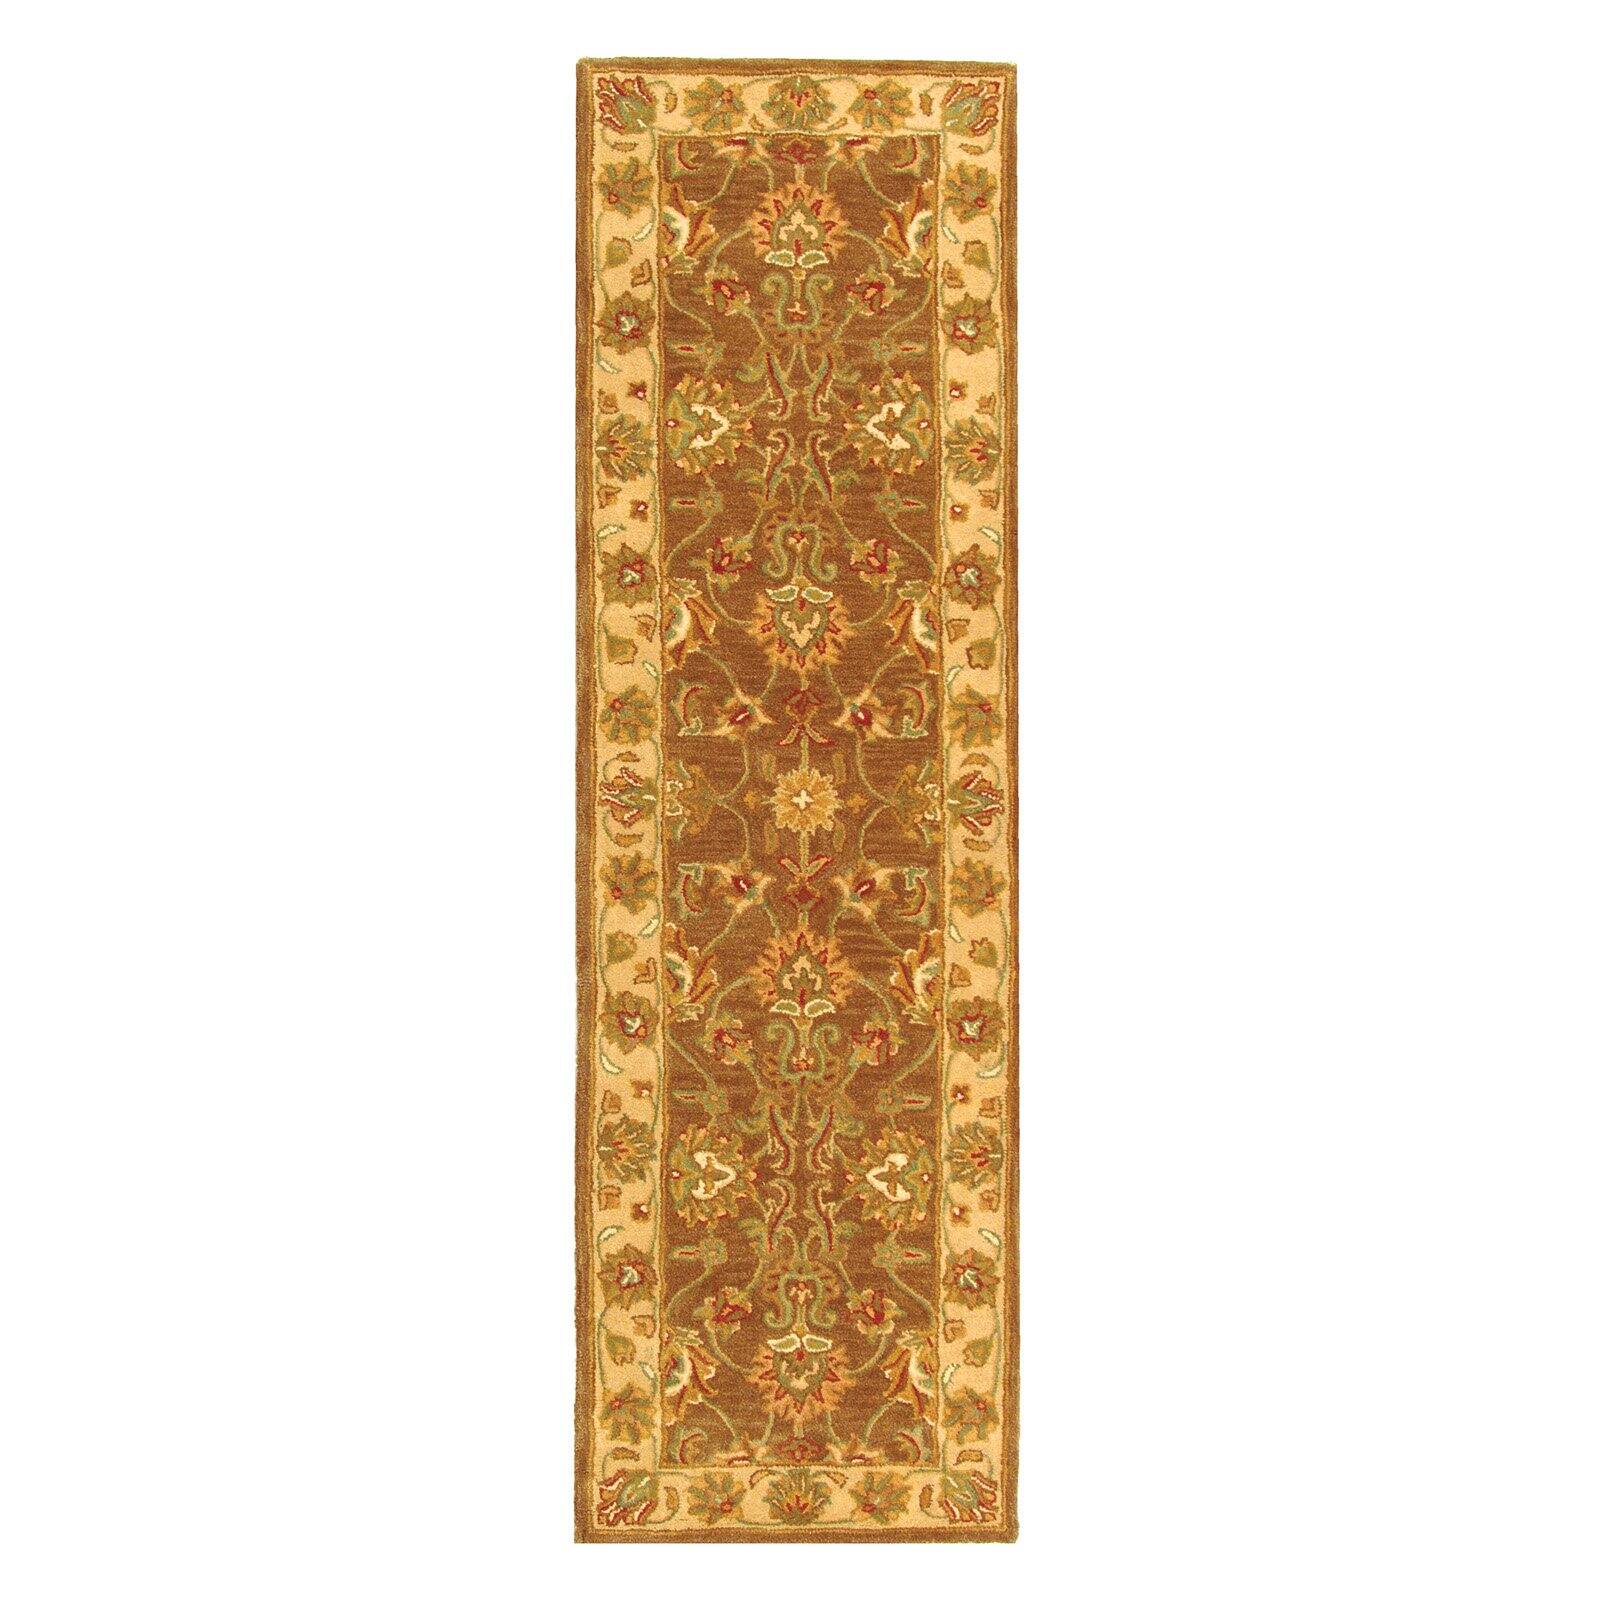 SAFAVIEH Heritage Regis Traditional Wool Area Rug, Brown/Ivory, 2' x 3' - image 3 of 9